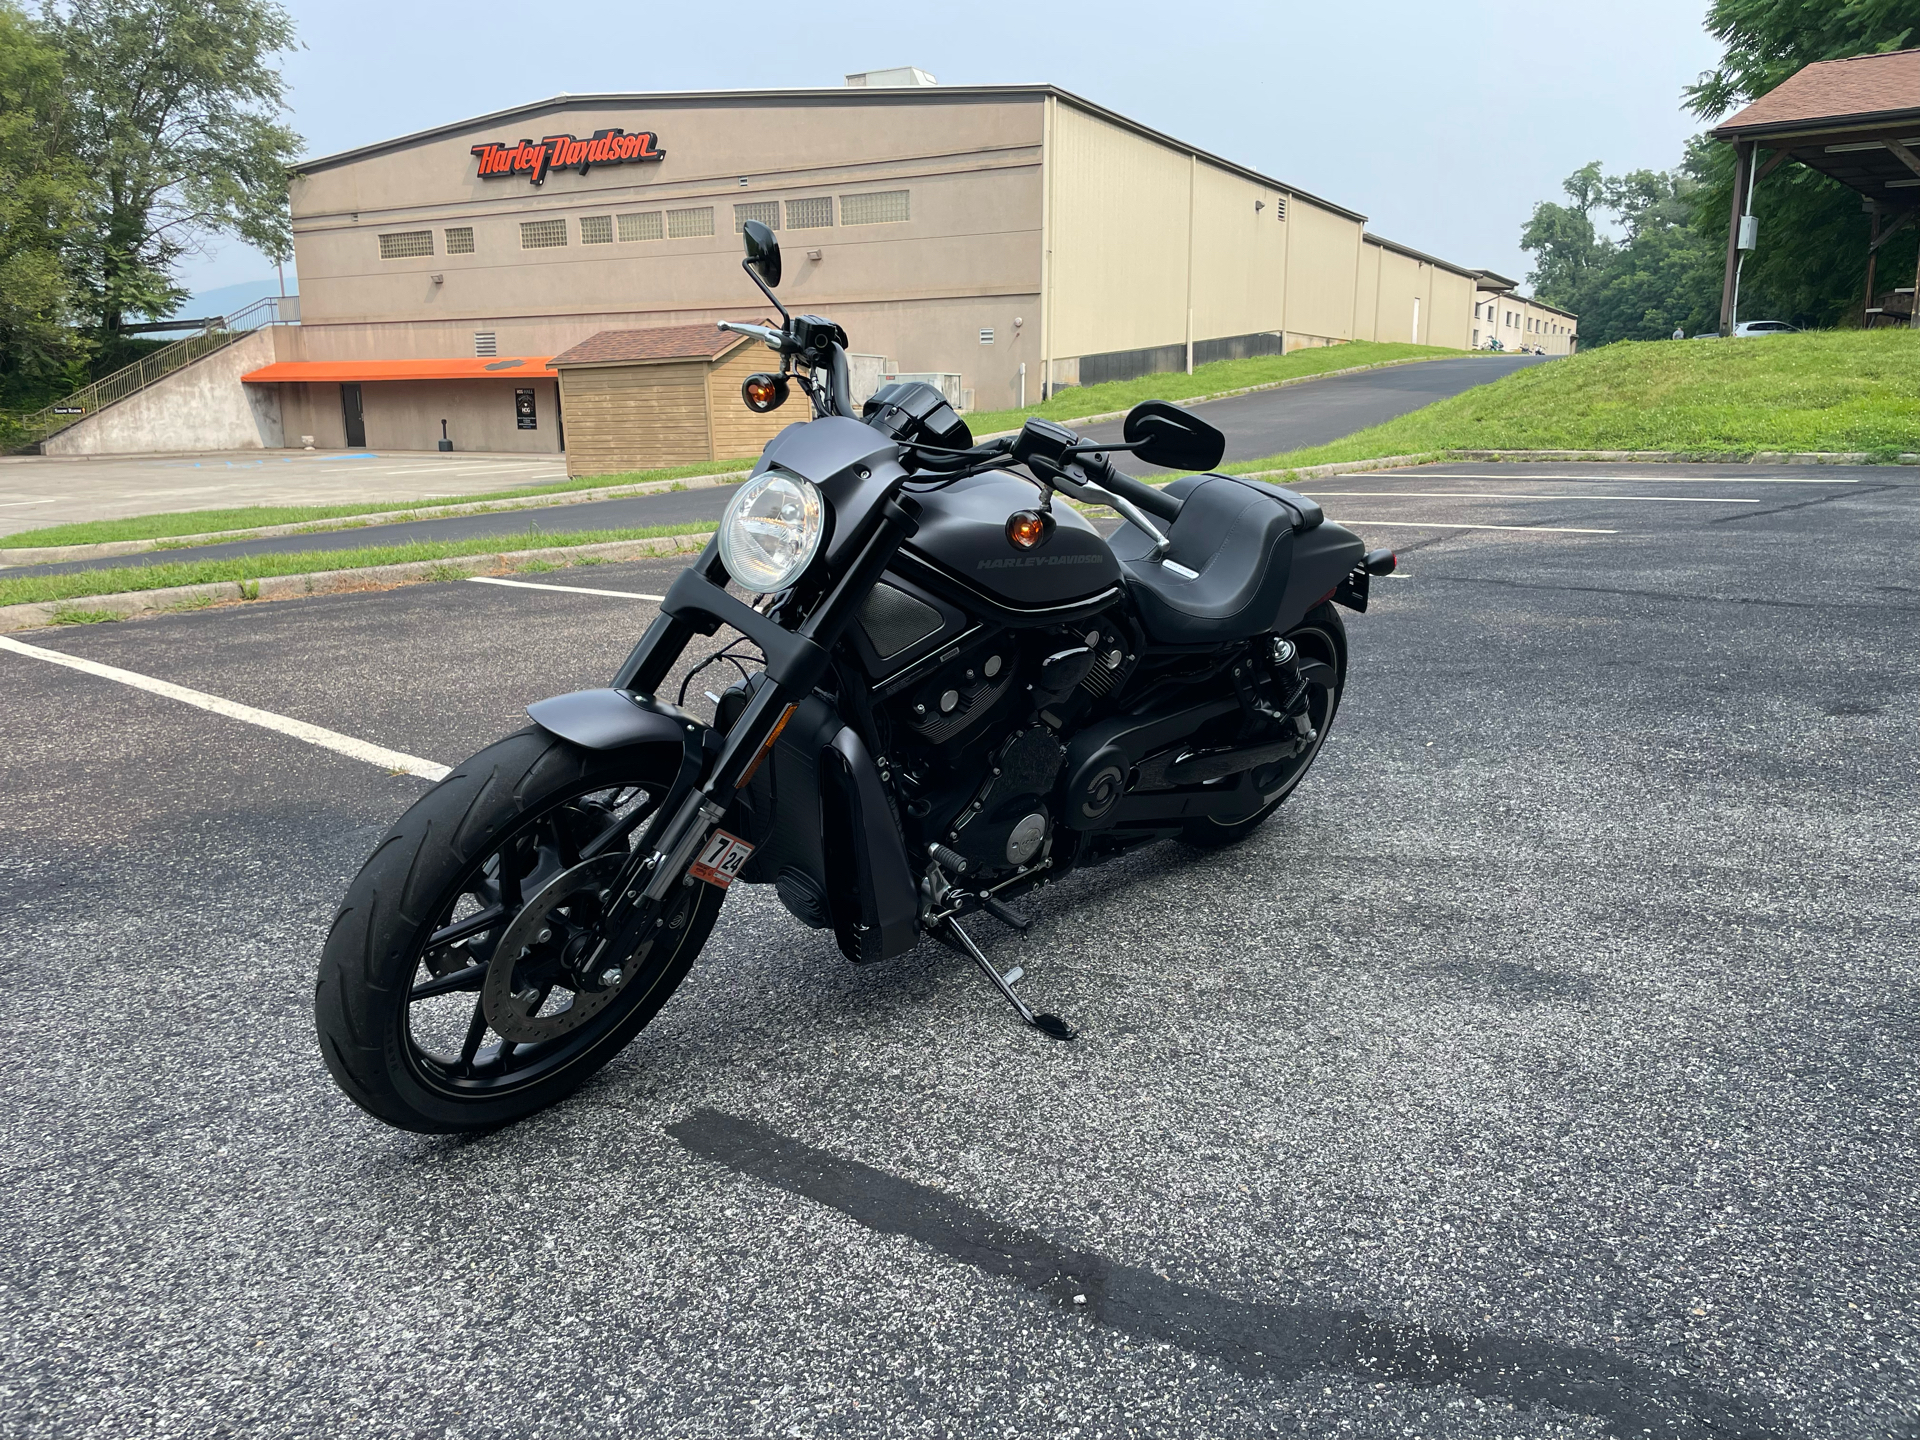 2016 Harley-Davidson Night Rod Special in Roanoke, Virginia - Photo 8